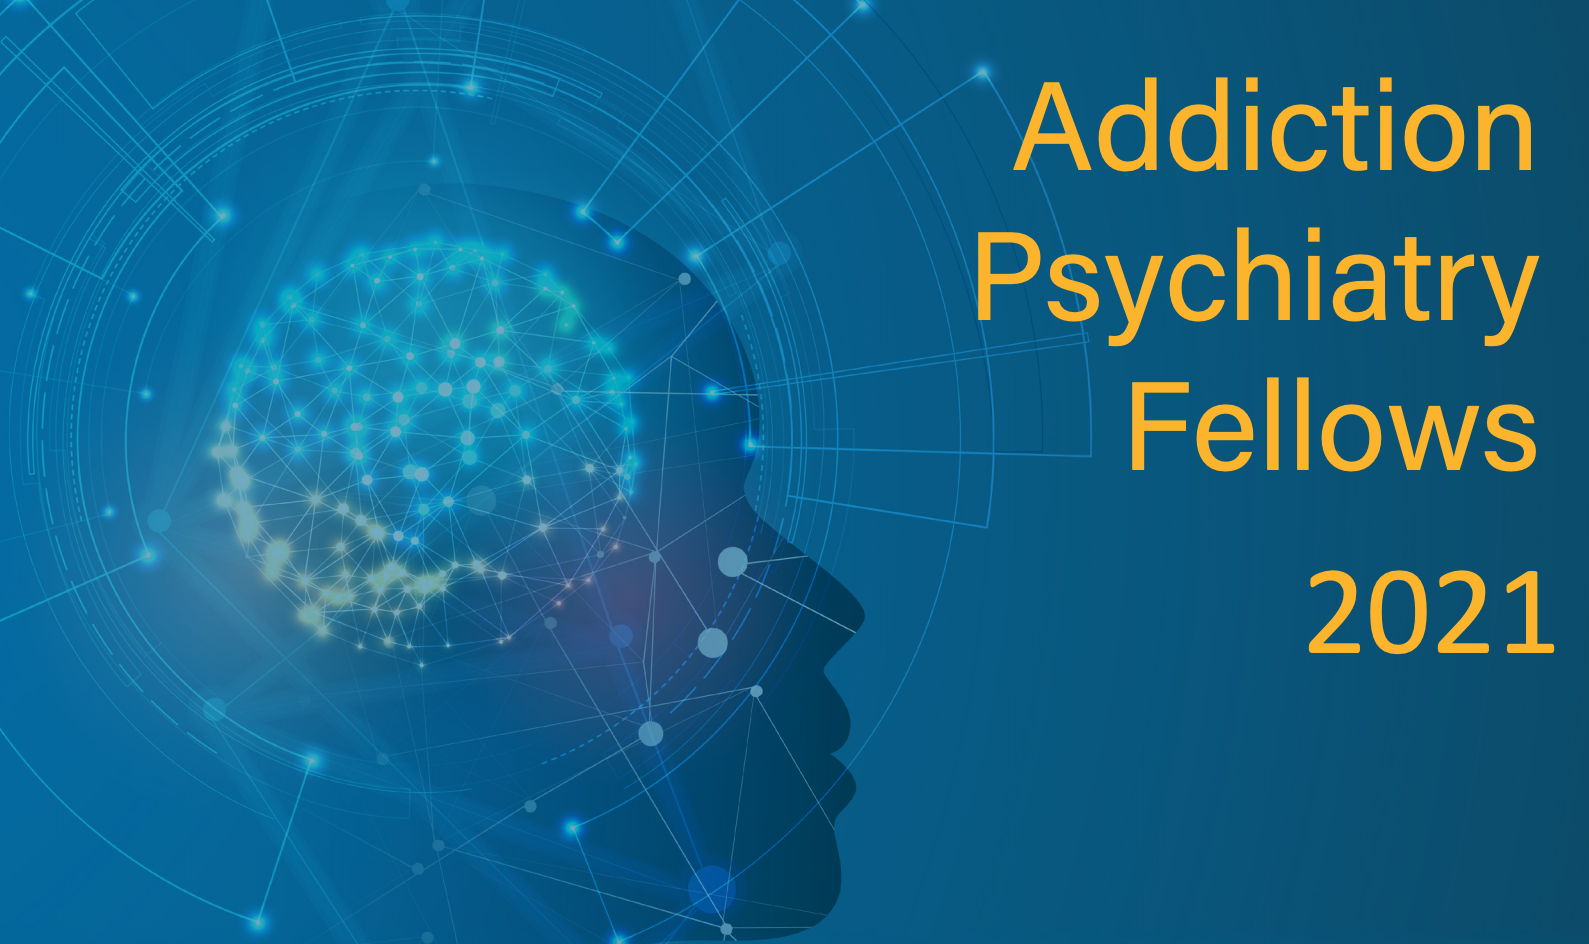 Congratulations to Addiction Psychiatry Fellows!